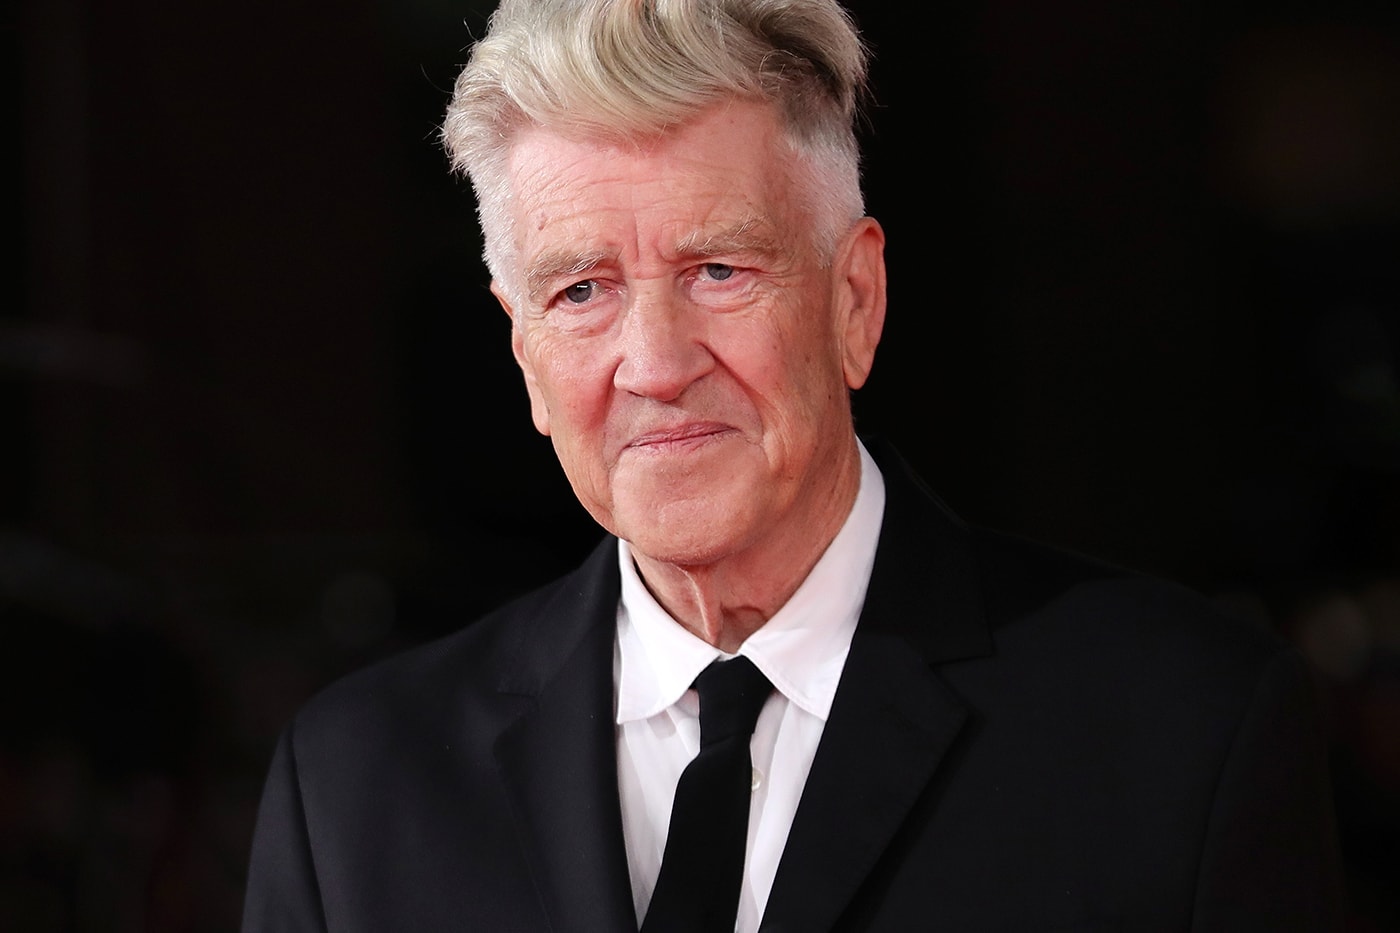 David Lynch Shoots Down New Film Laura Dern cannes premiere rumors